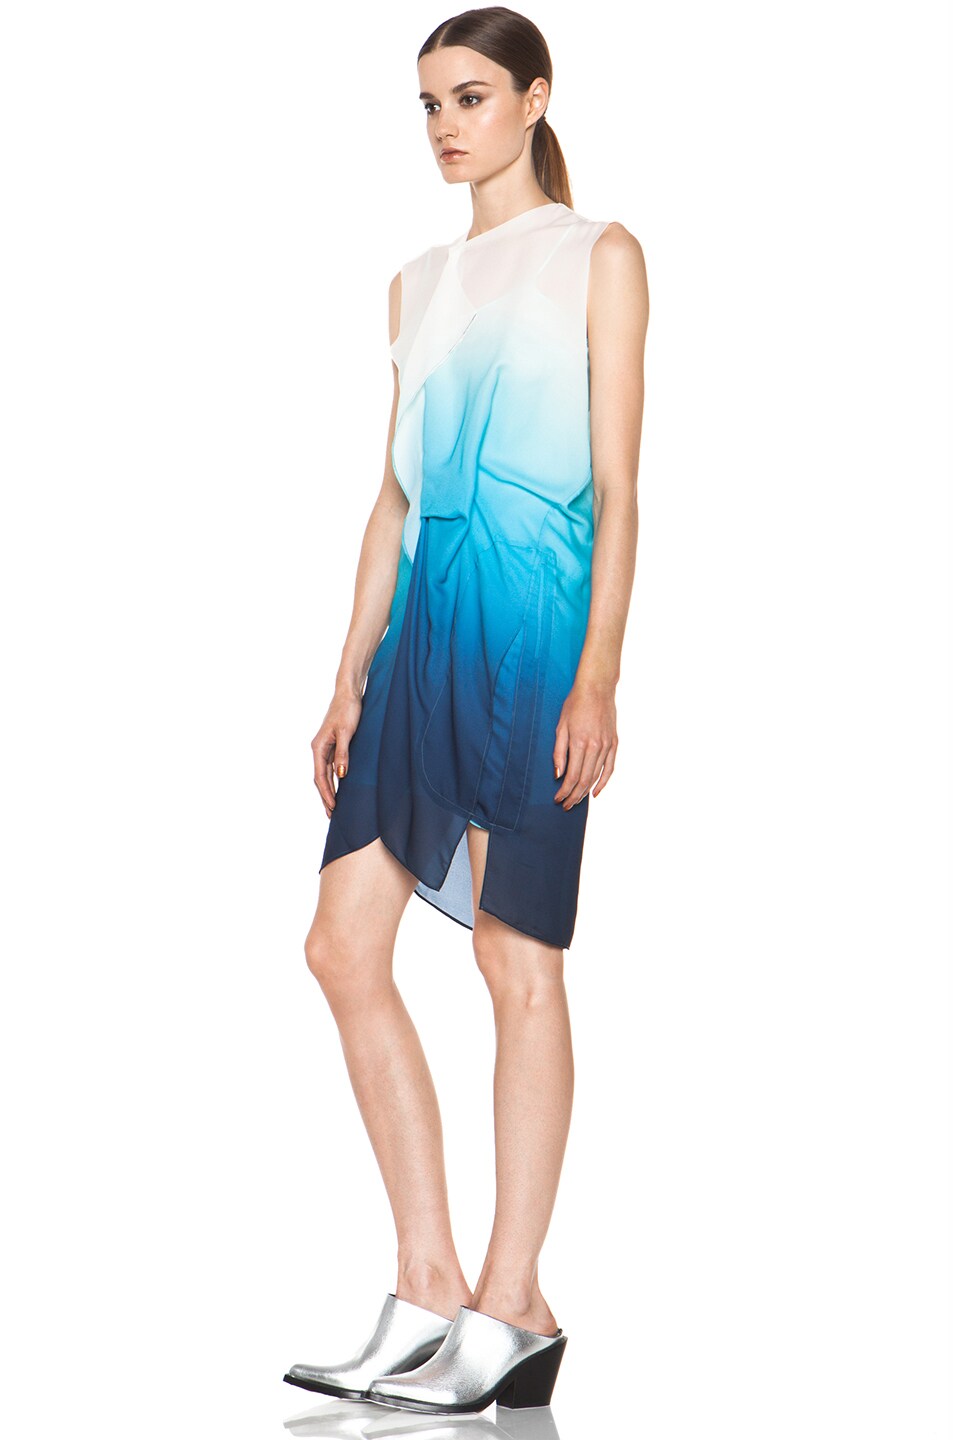 Acne Studios Alexis Degrade Dress in Turquoise | FWRD